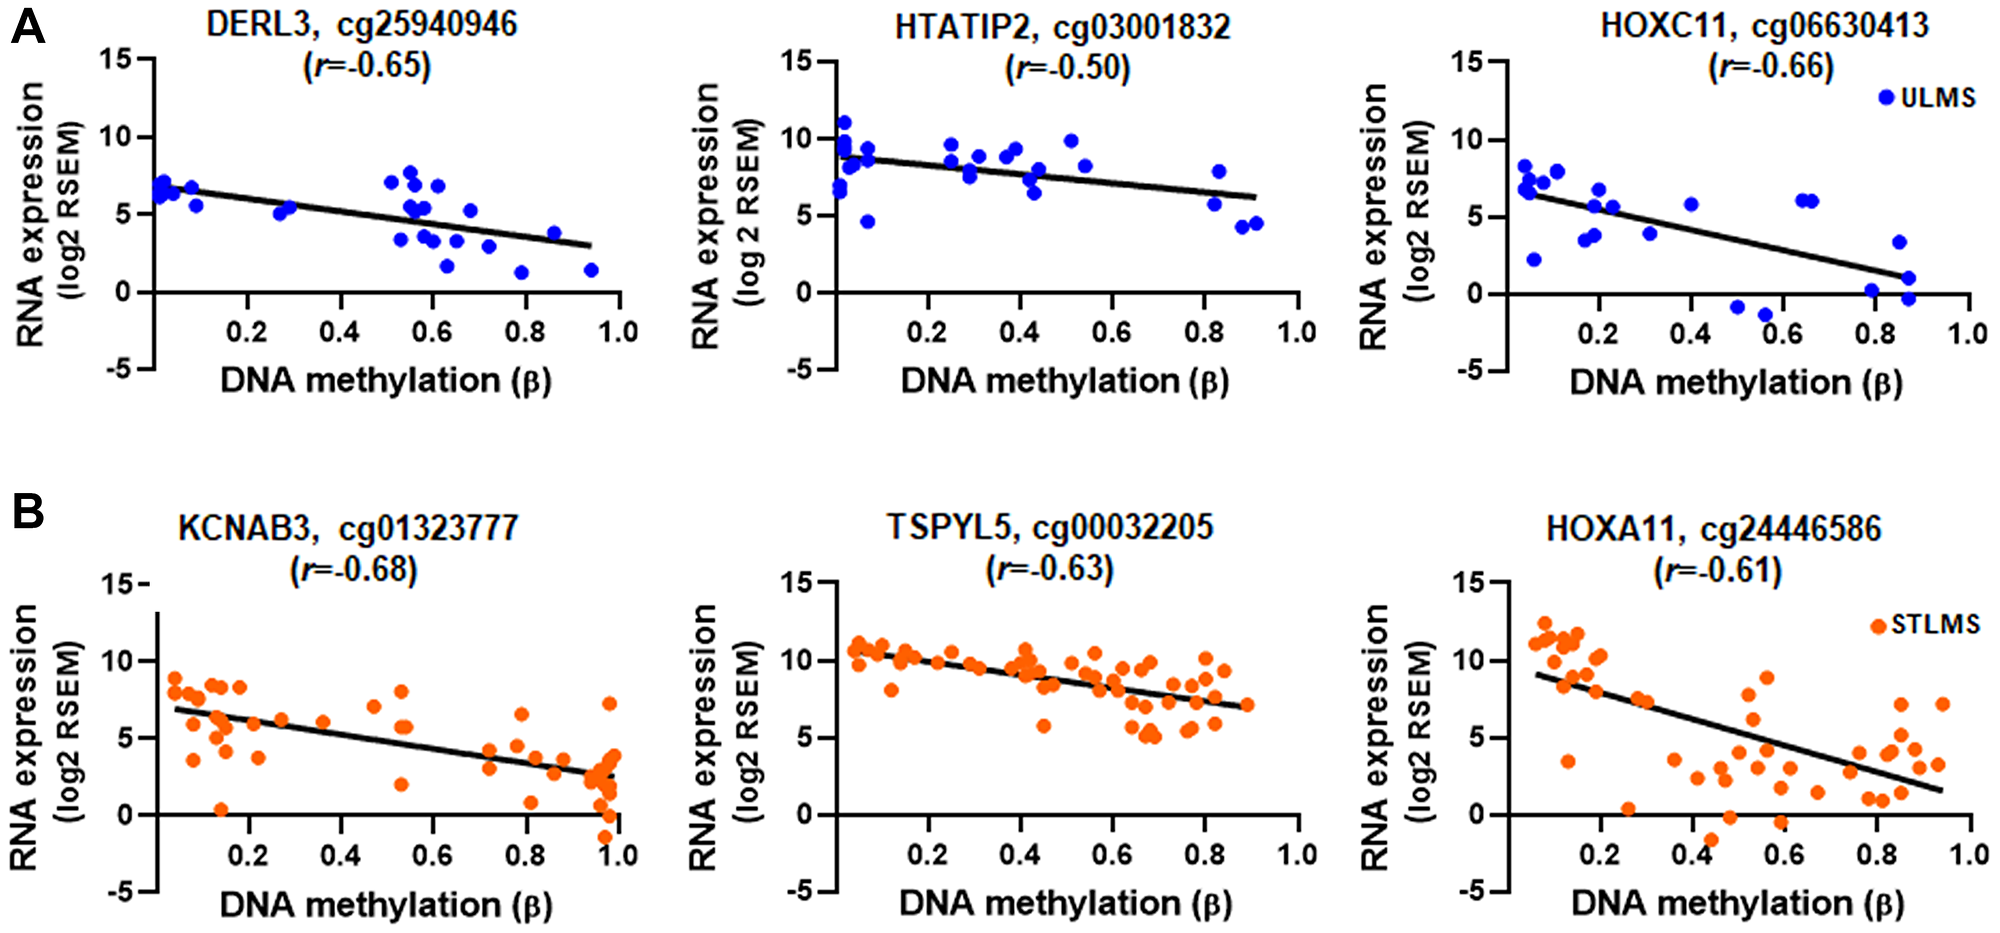 Correlation between gene expression and DNA methylation.